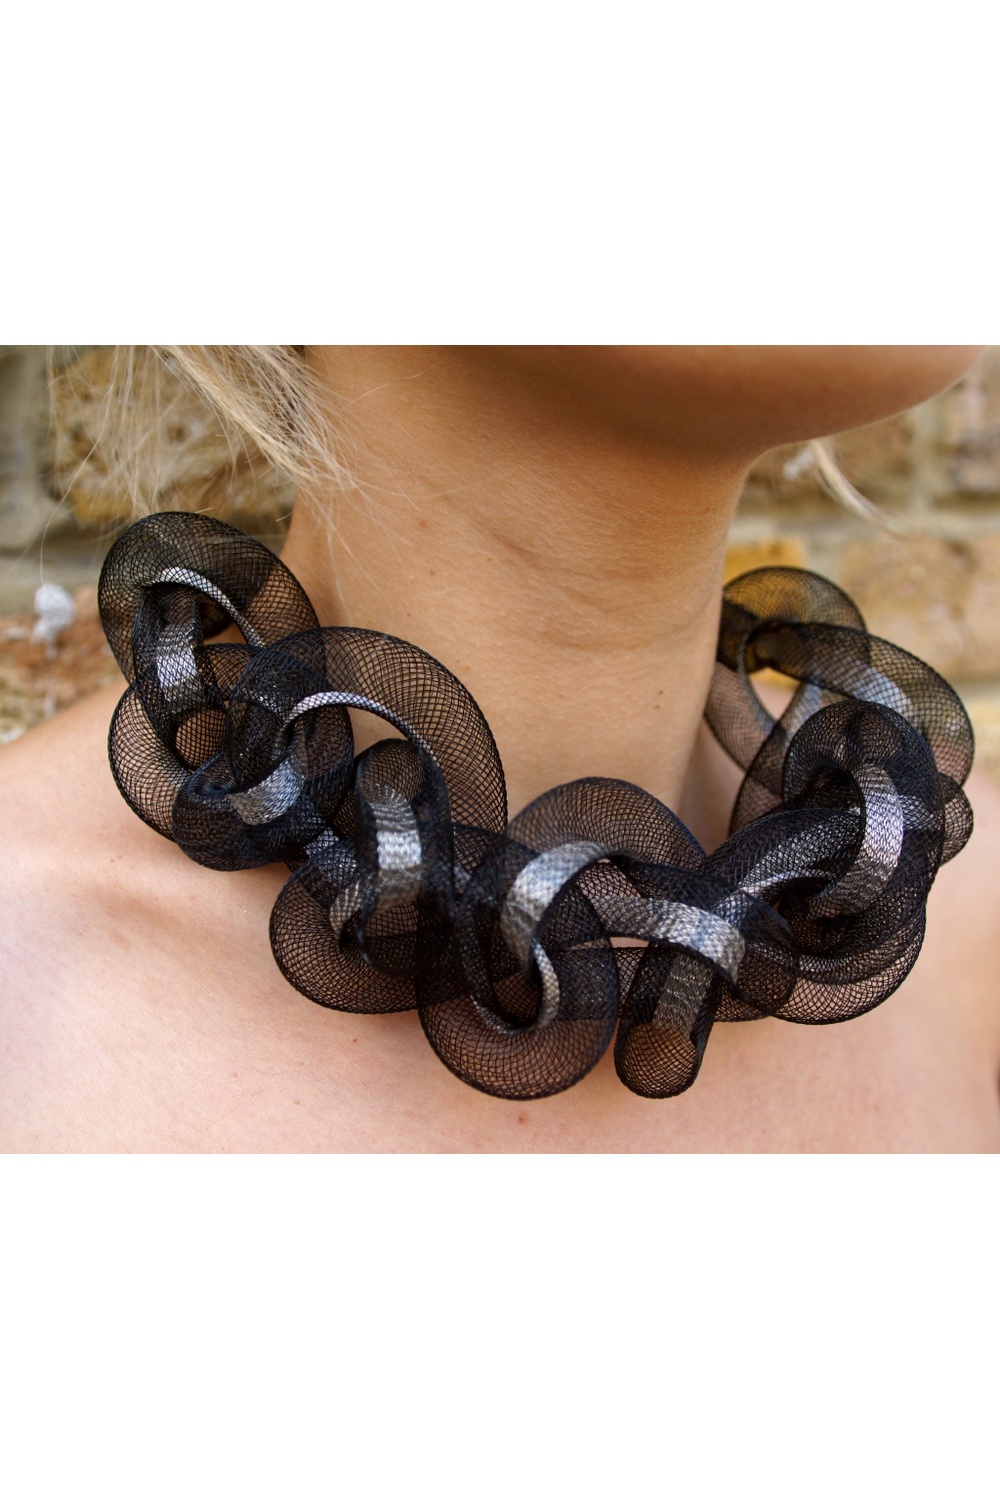 Buy Voluminous black wire contemporary statement handmade necklace, alternative jewellery